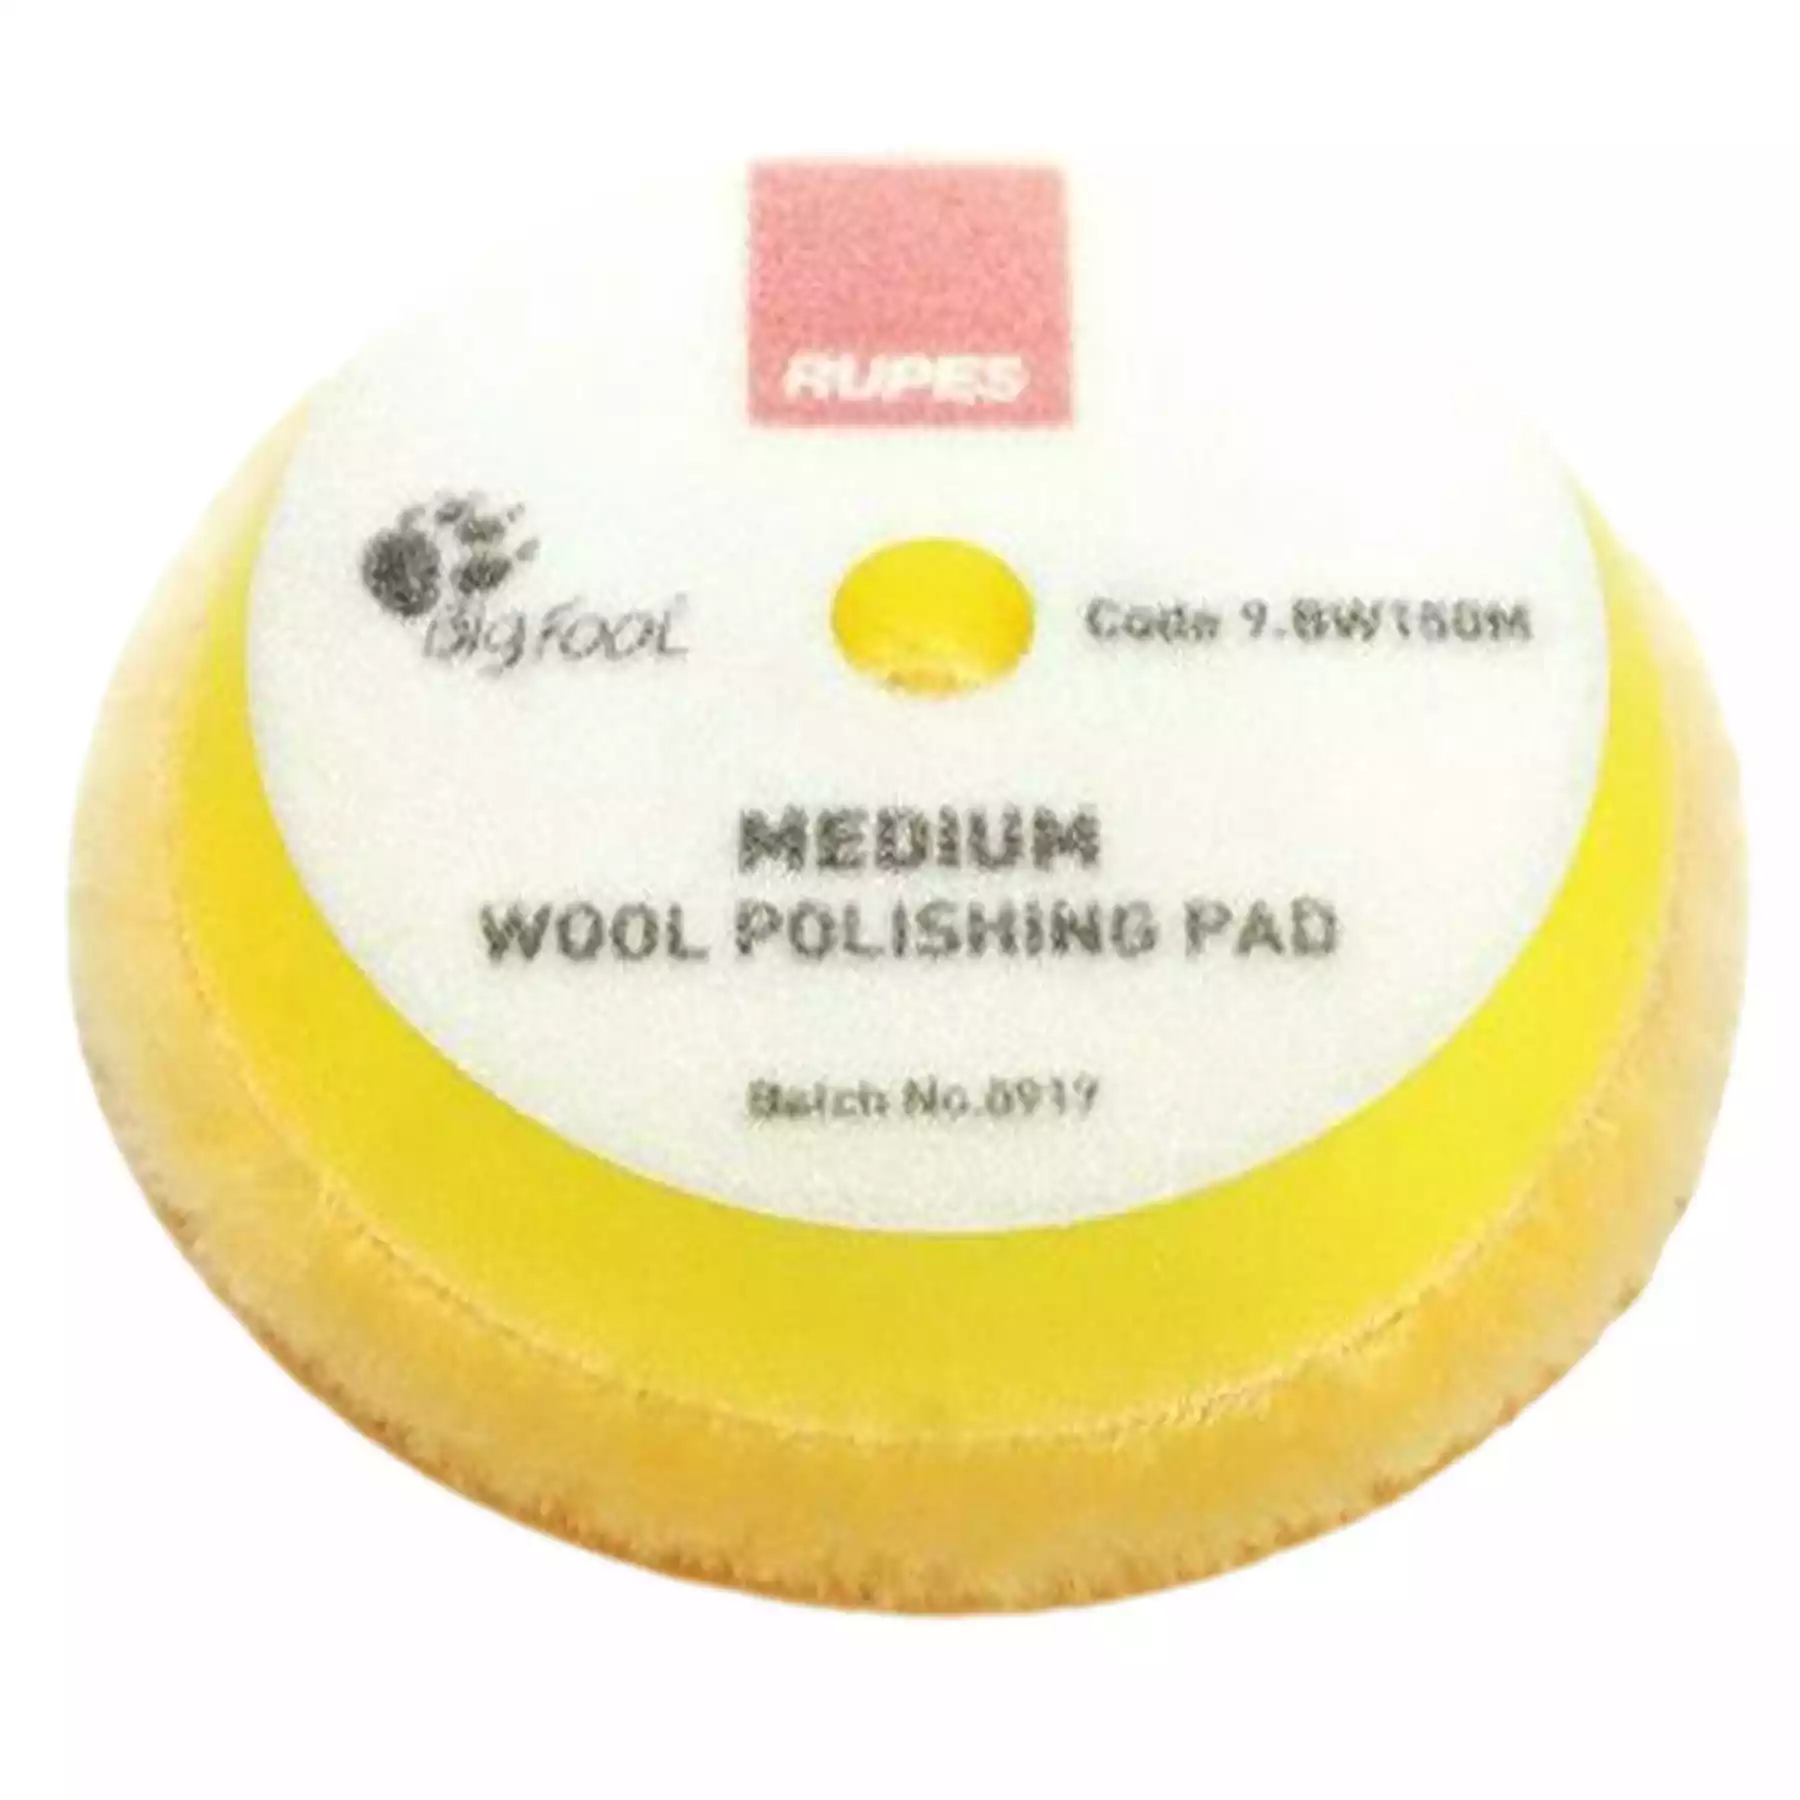 D-A Medium Yellow Wool Polishing Pad 130/145mm (9.BW150M)